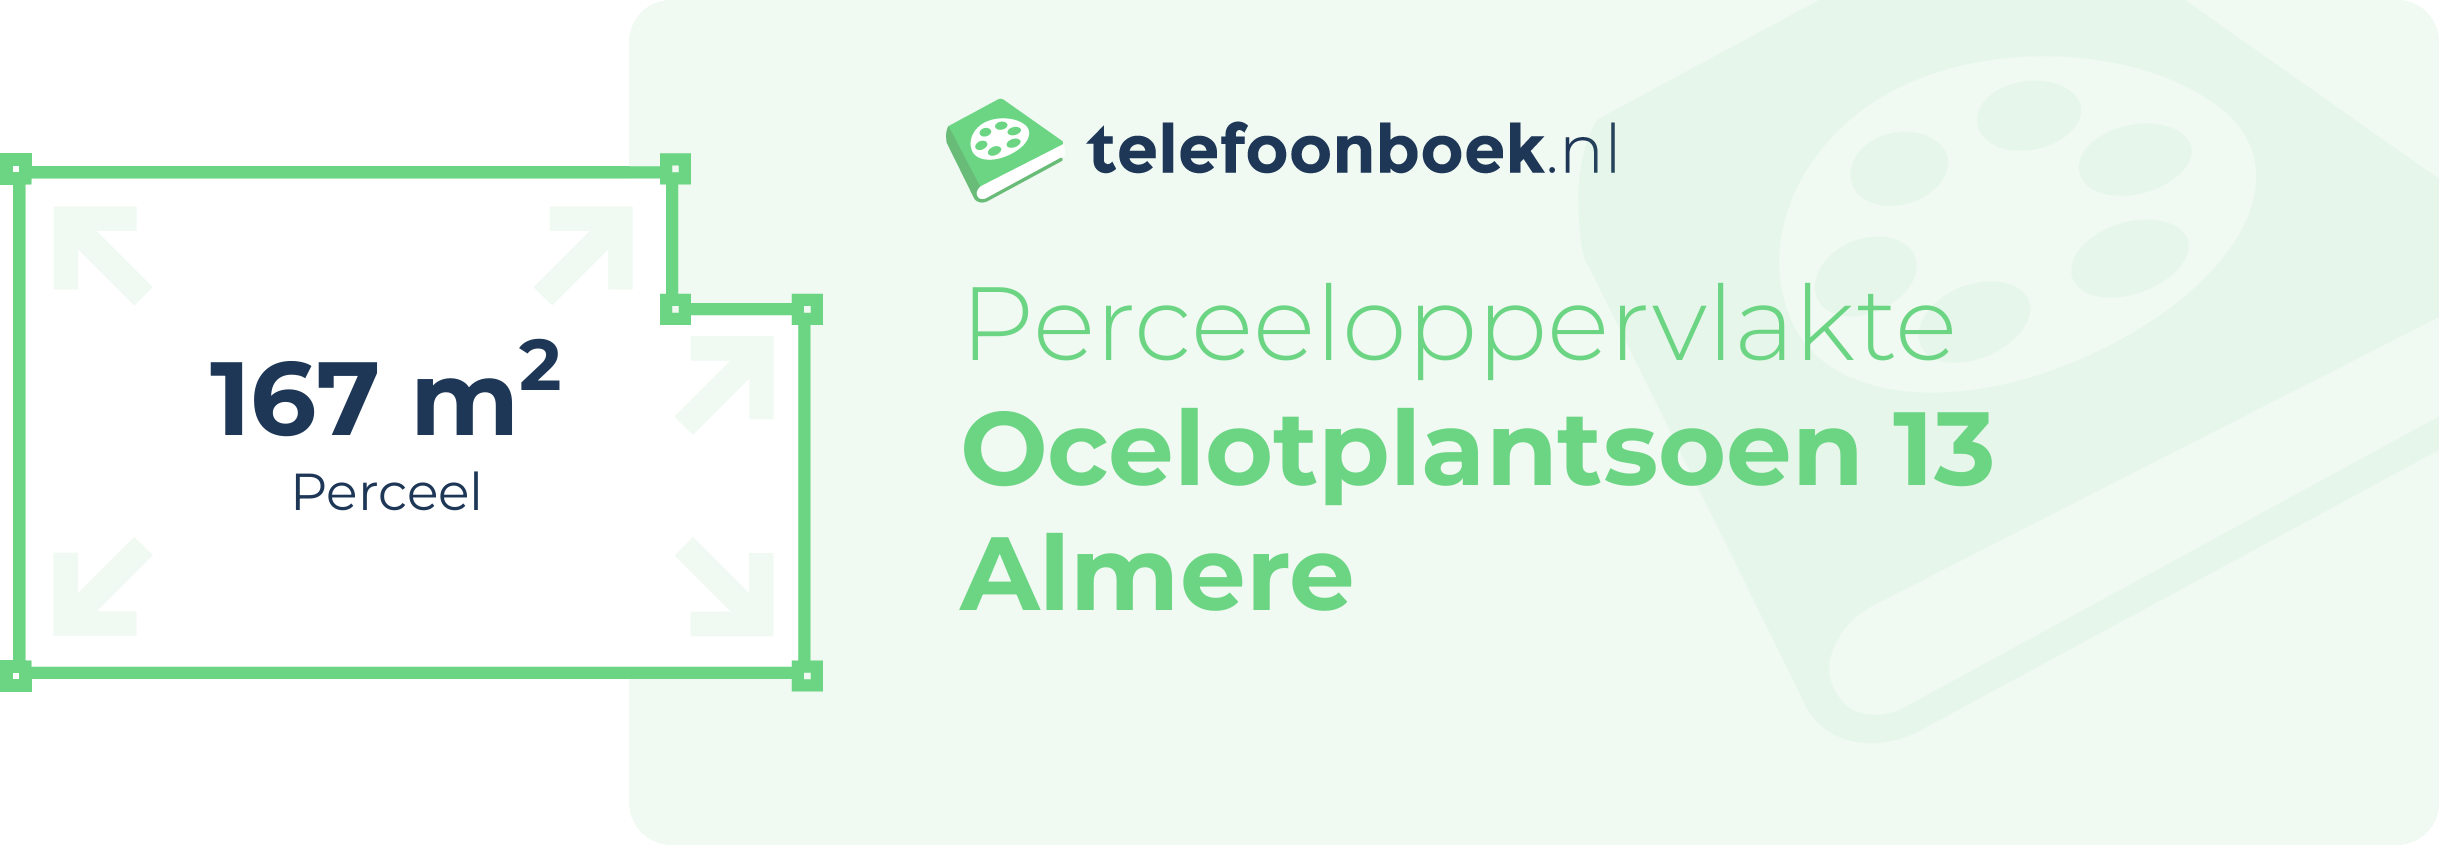 Perceeloppervlakte Ocelotplantsoen 13 Almere